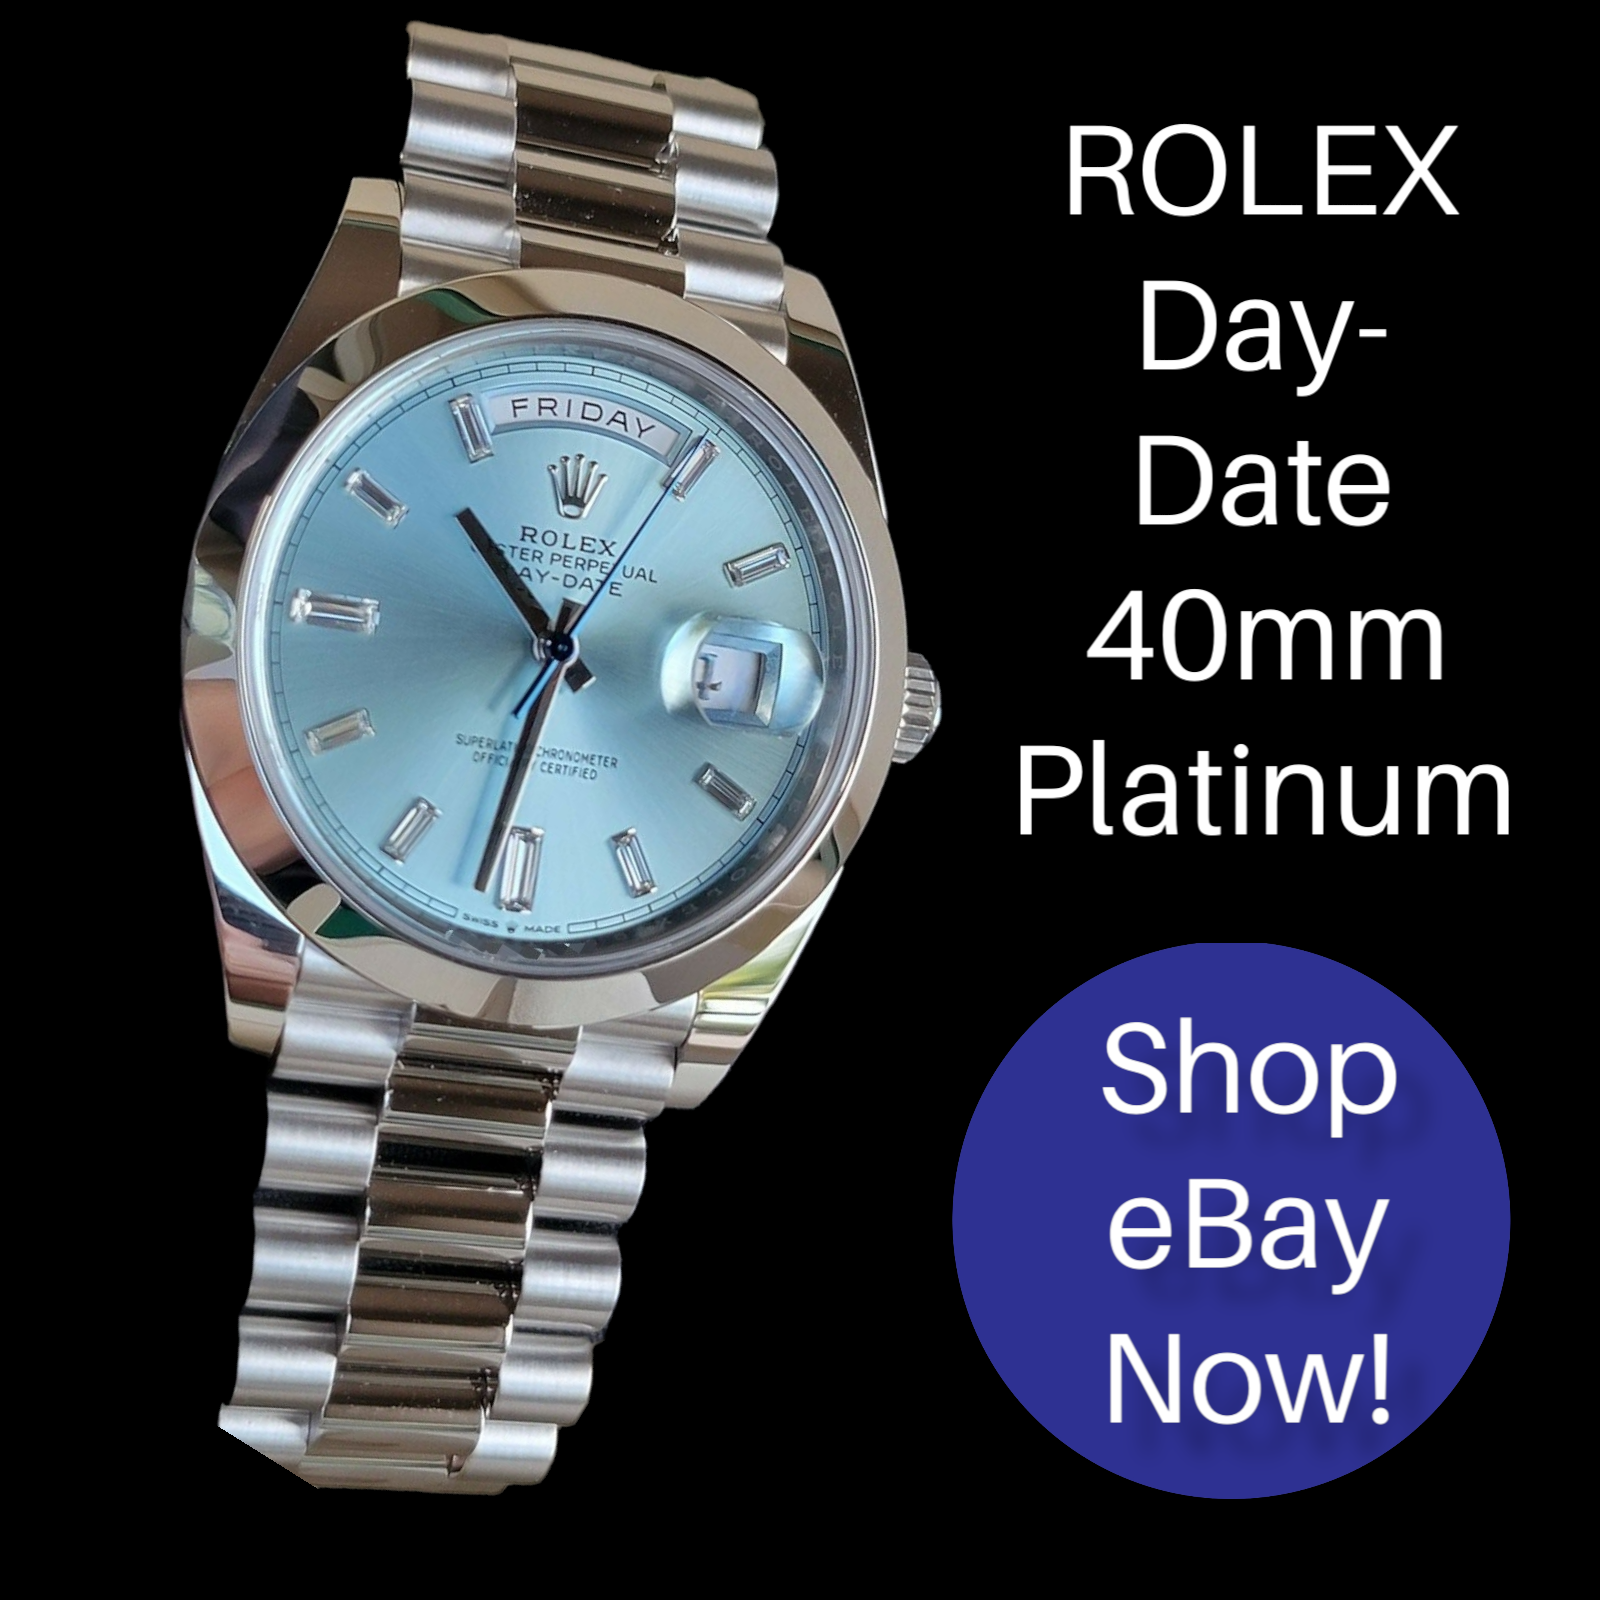 Rolex Day-Date 40mm Platinum